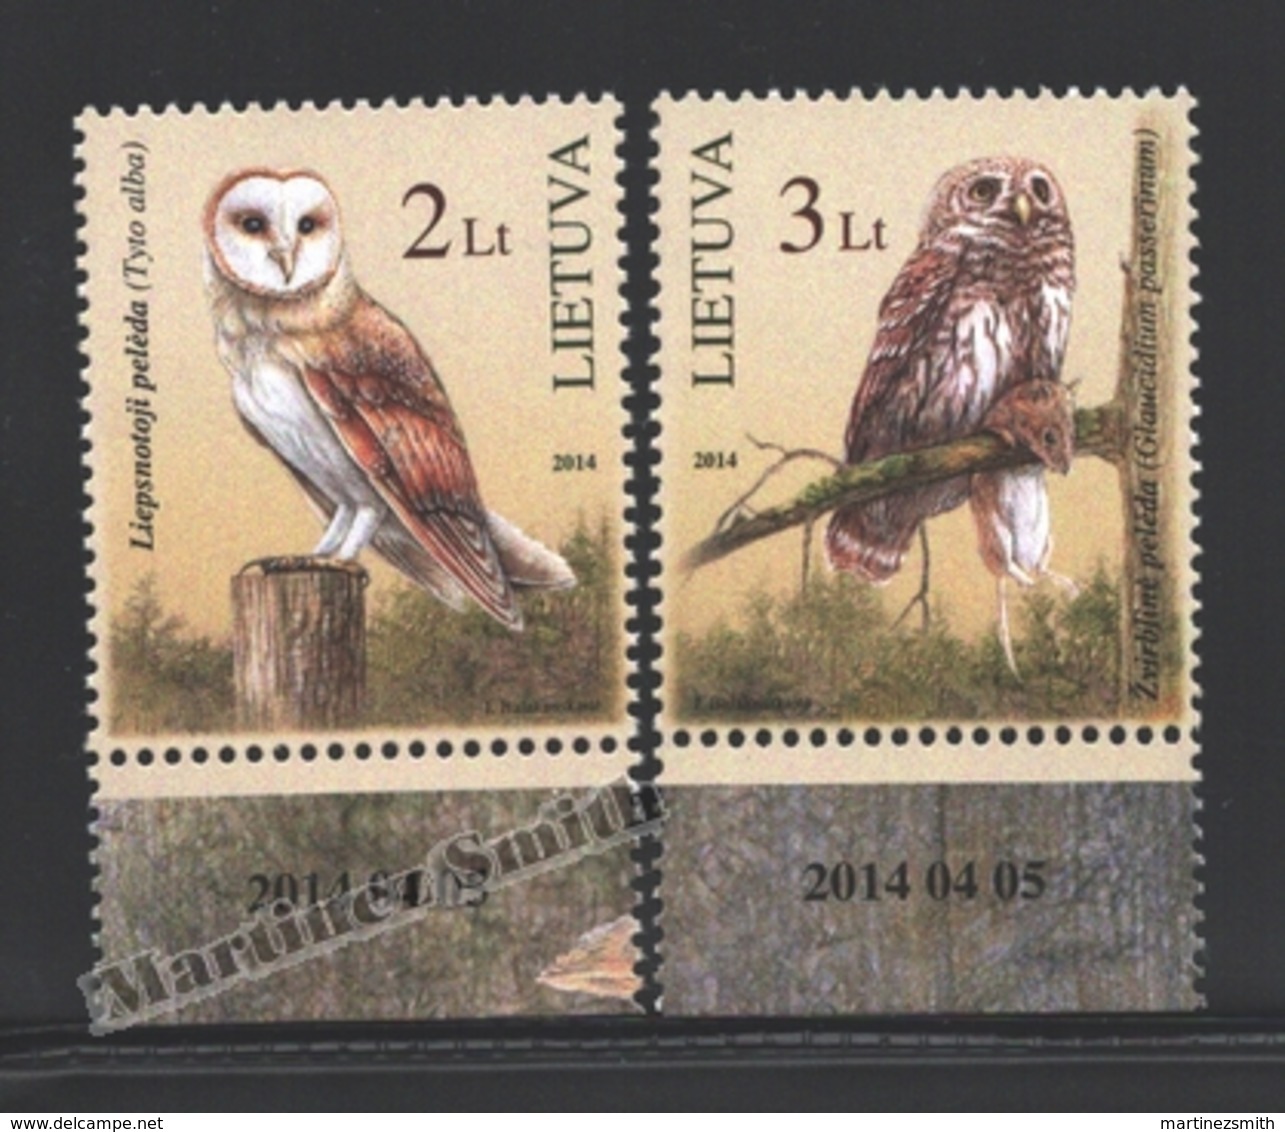 Lituanie – Lithuania – Lituania 2014 Yvert 1011-12, The Red Book, Fauna, Birds, Owls - MNH - Lituania